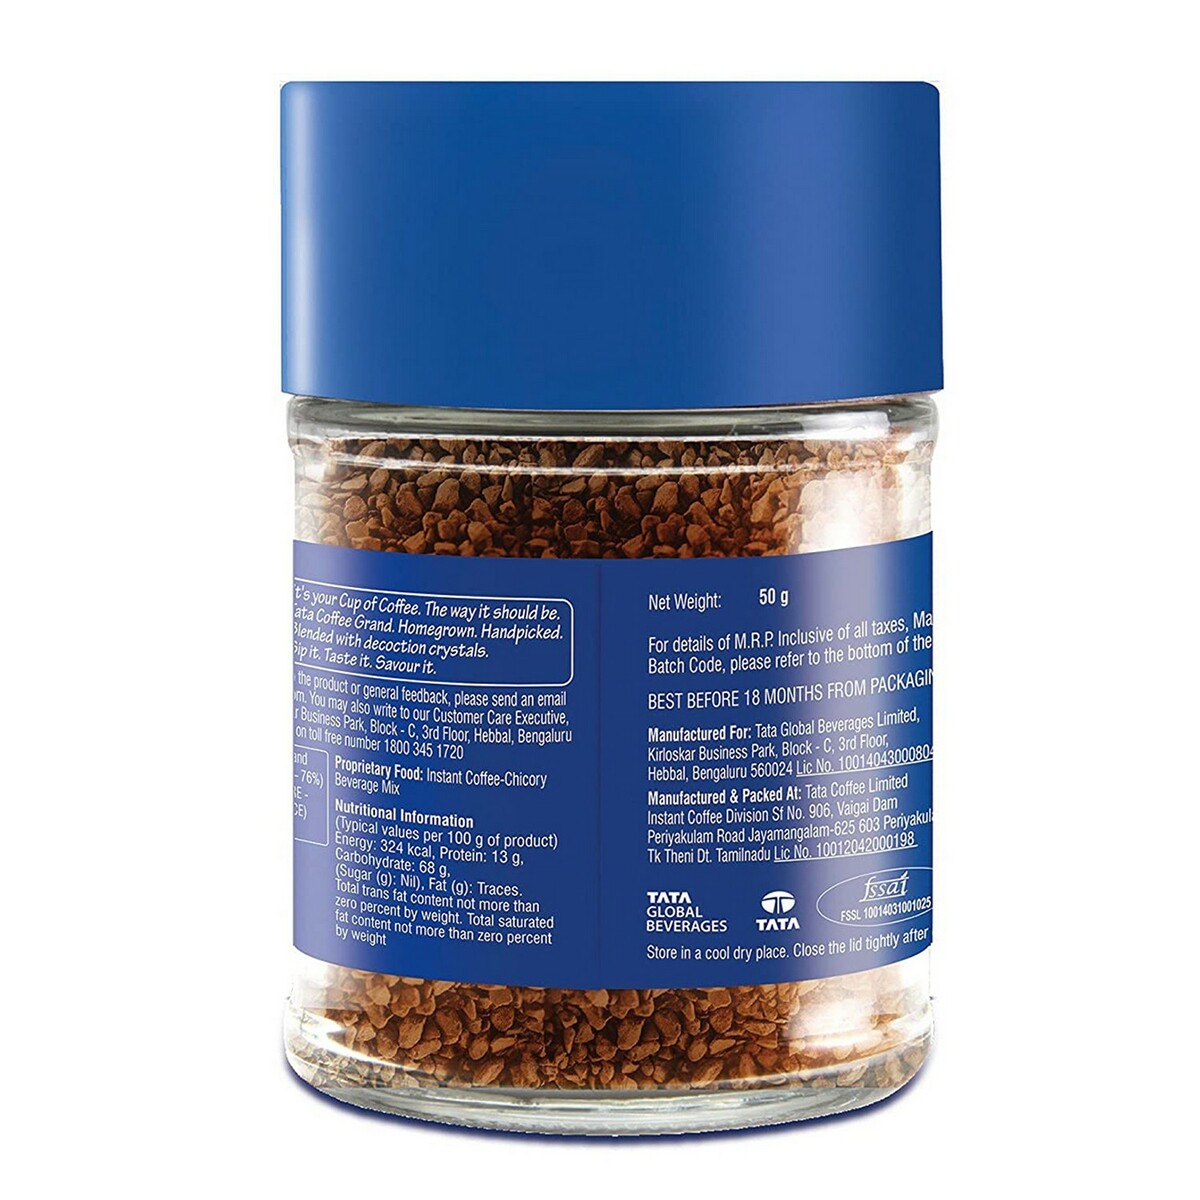 Tata Tetley Coffee Grand Instant 45g Jar